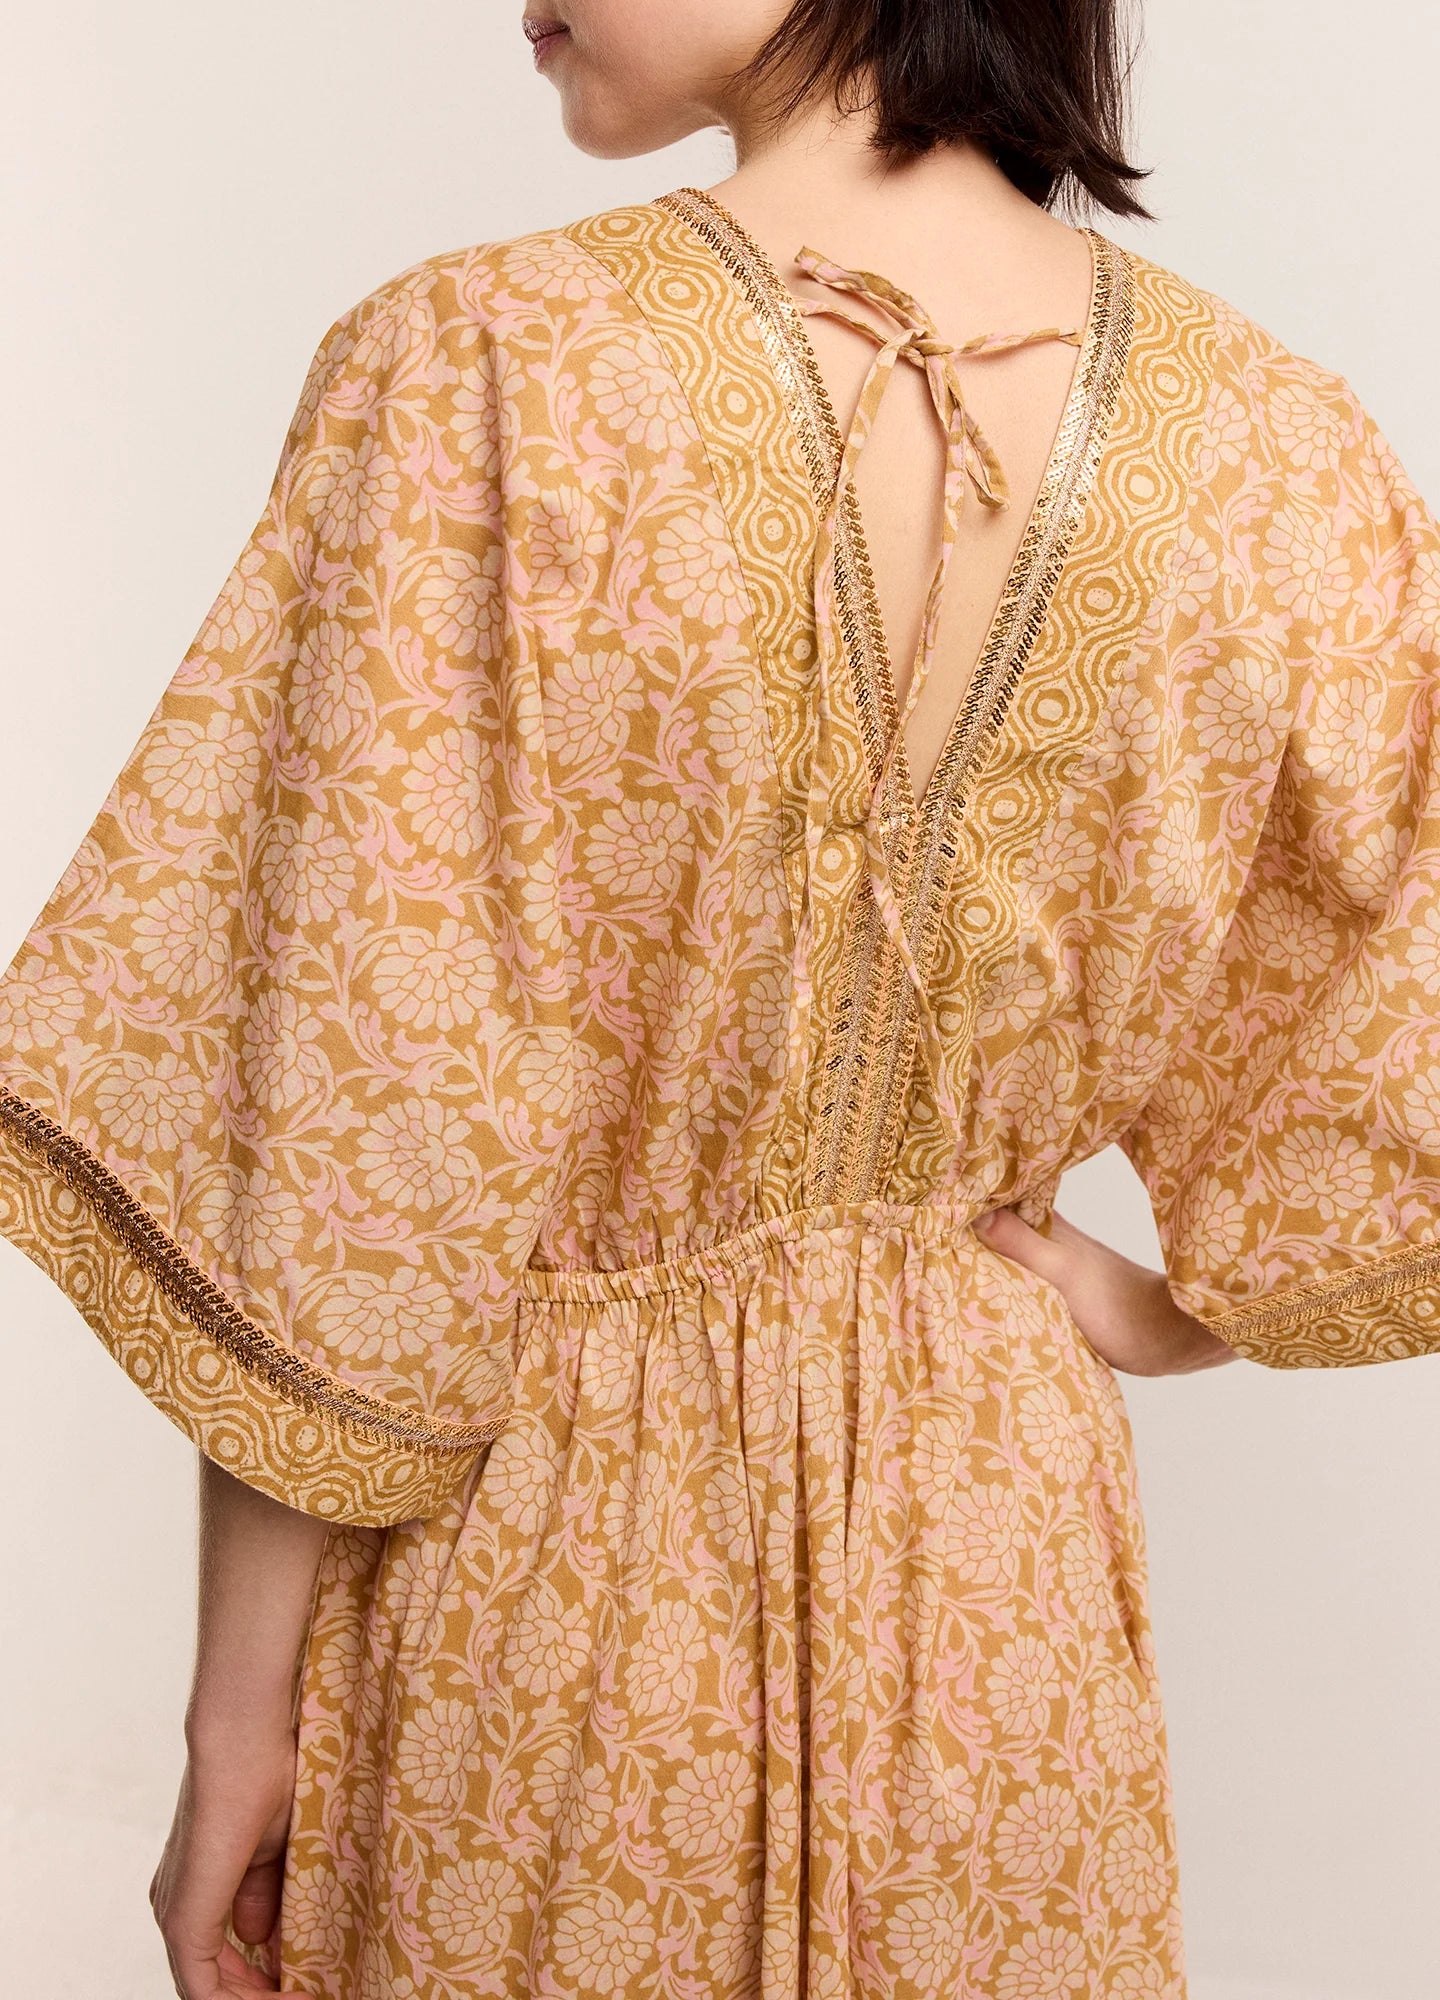 Kimono Dress in Soft Camel